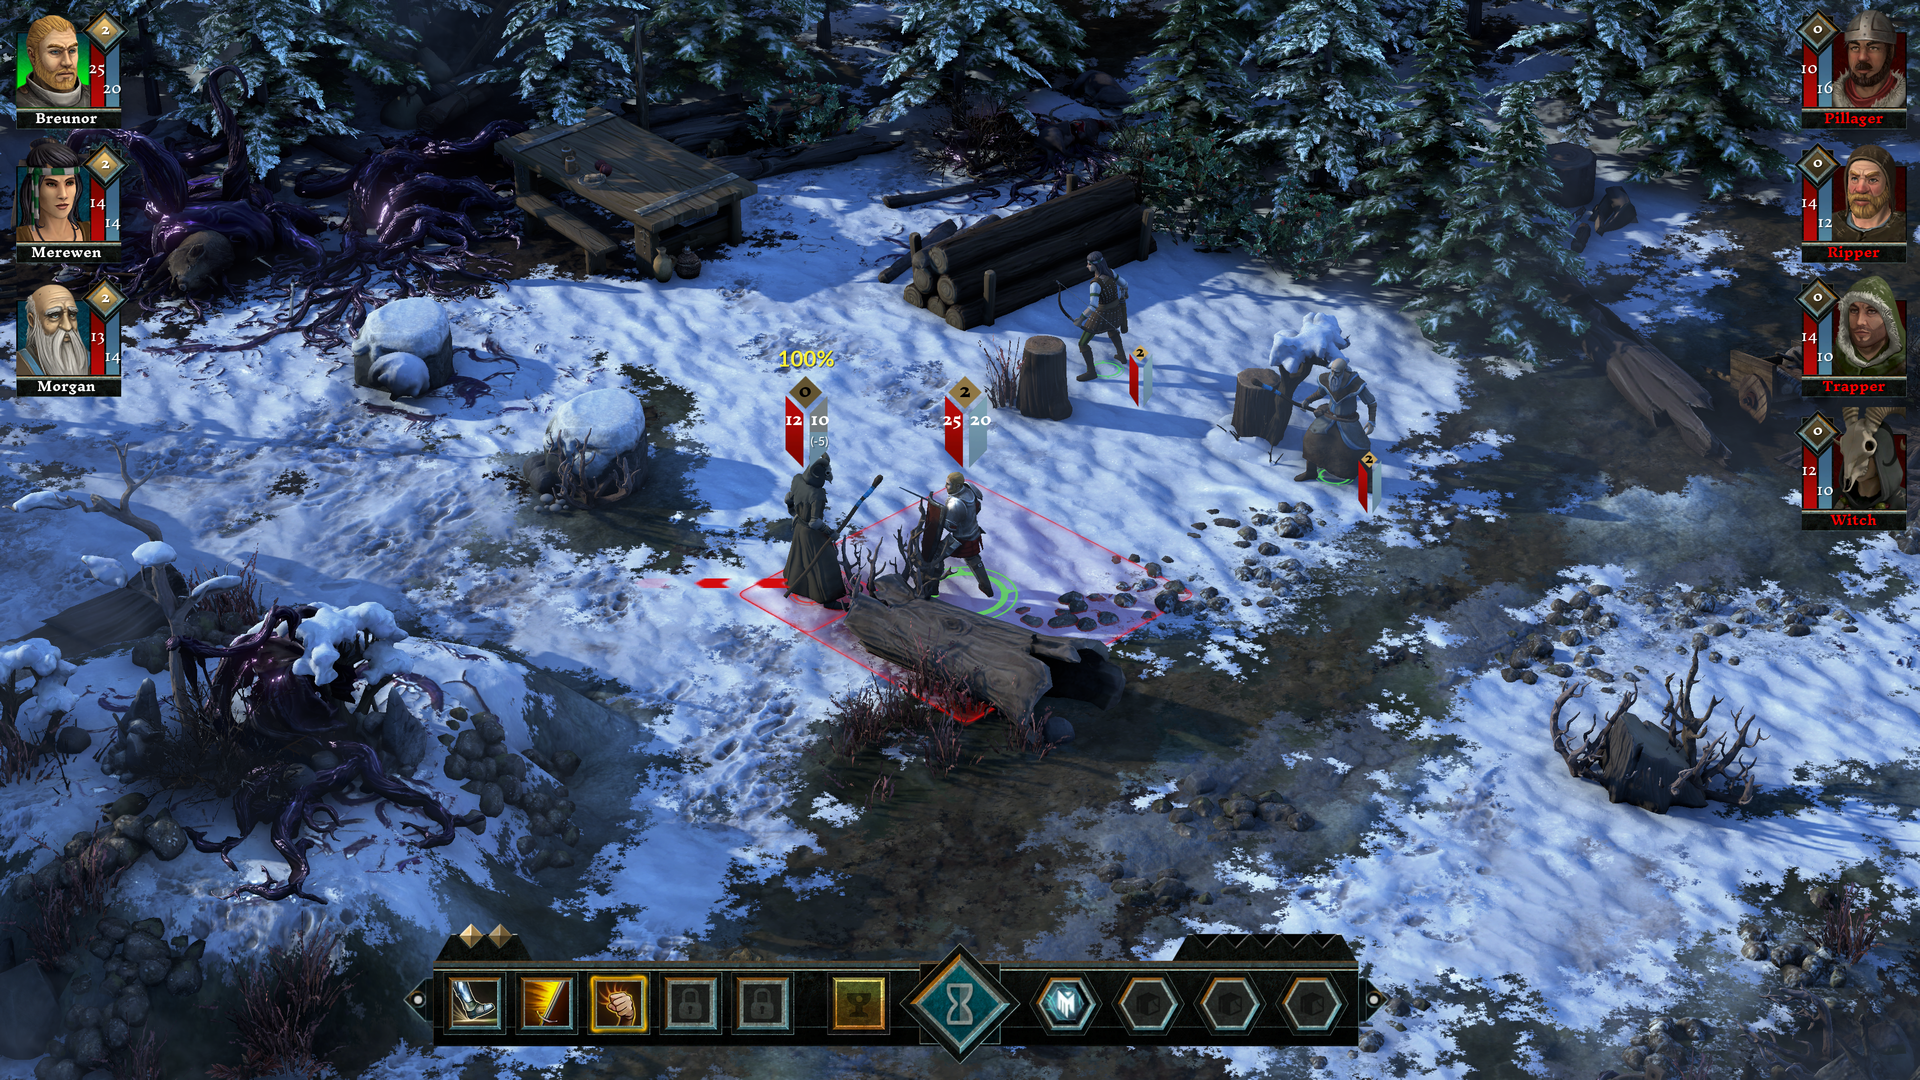 Max Level achievement in Pillars of Eternity 2: Deadfire - Ultimate Edition  (Windows)